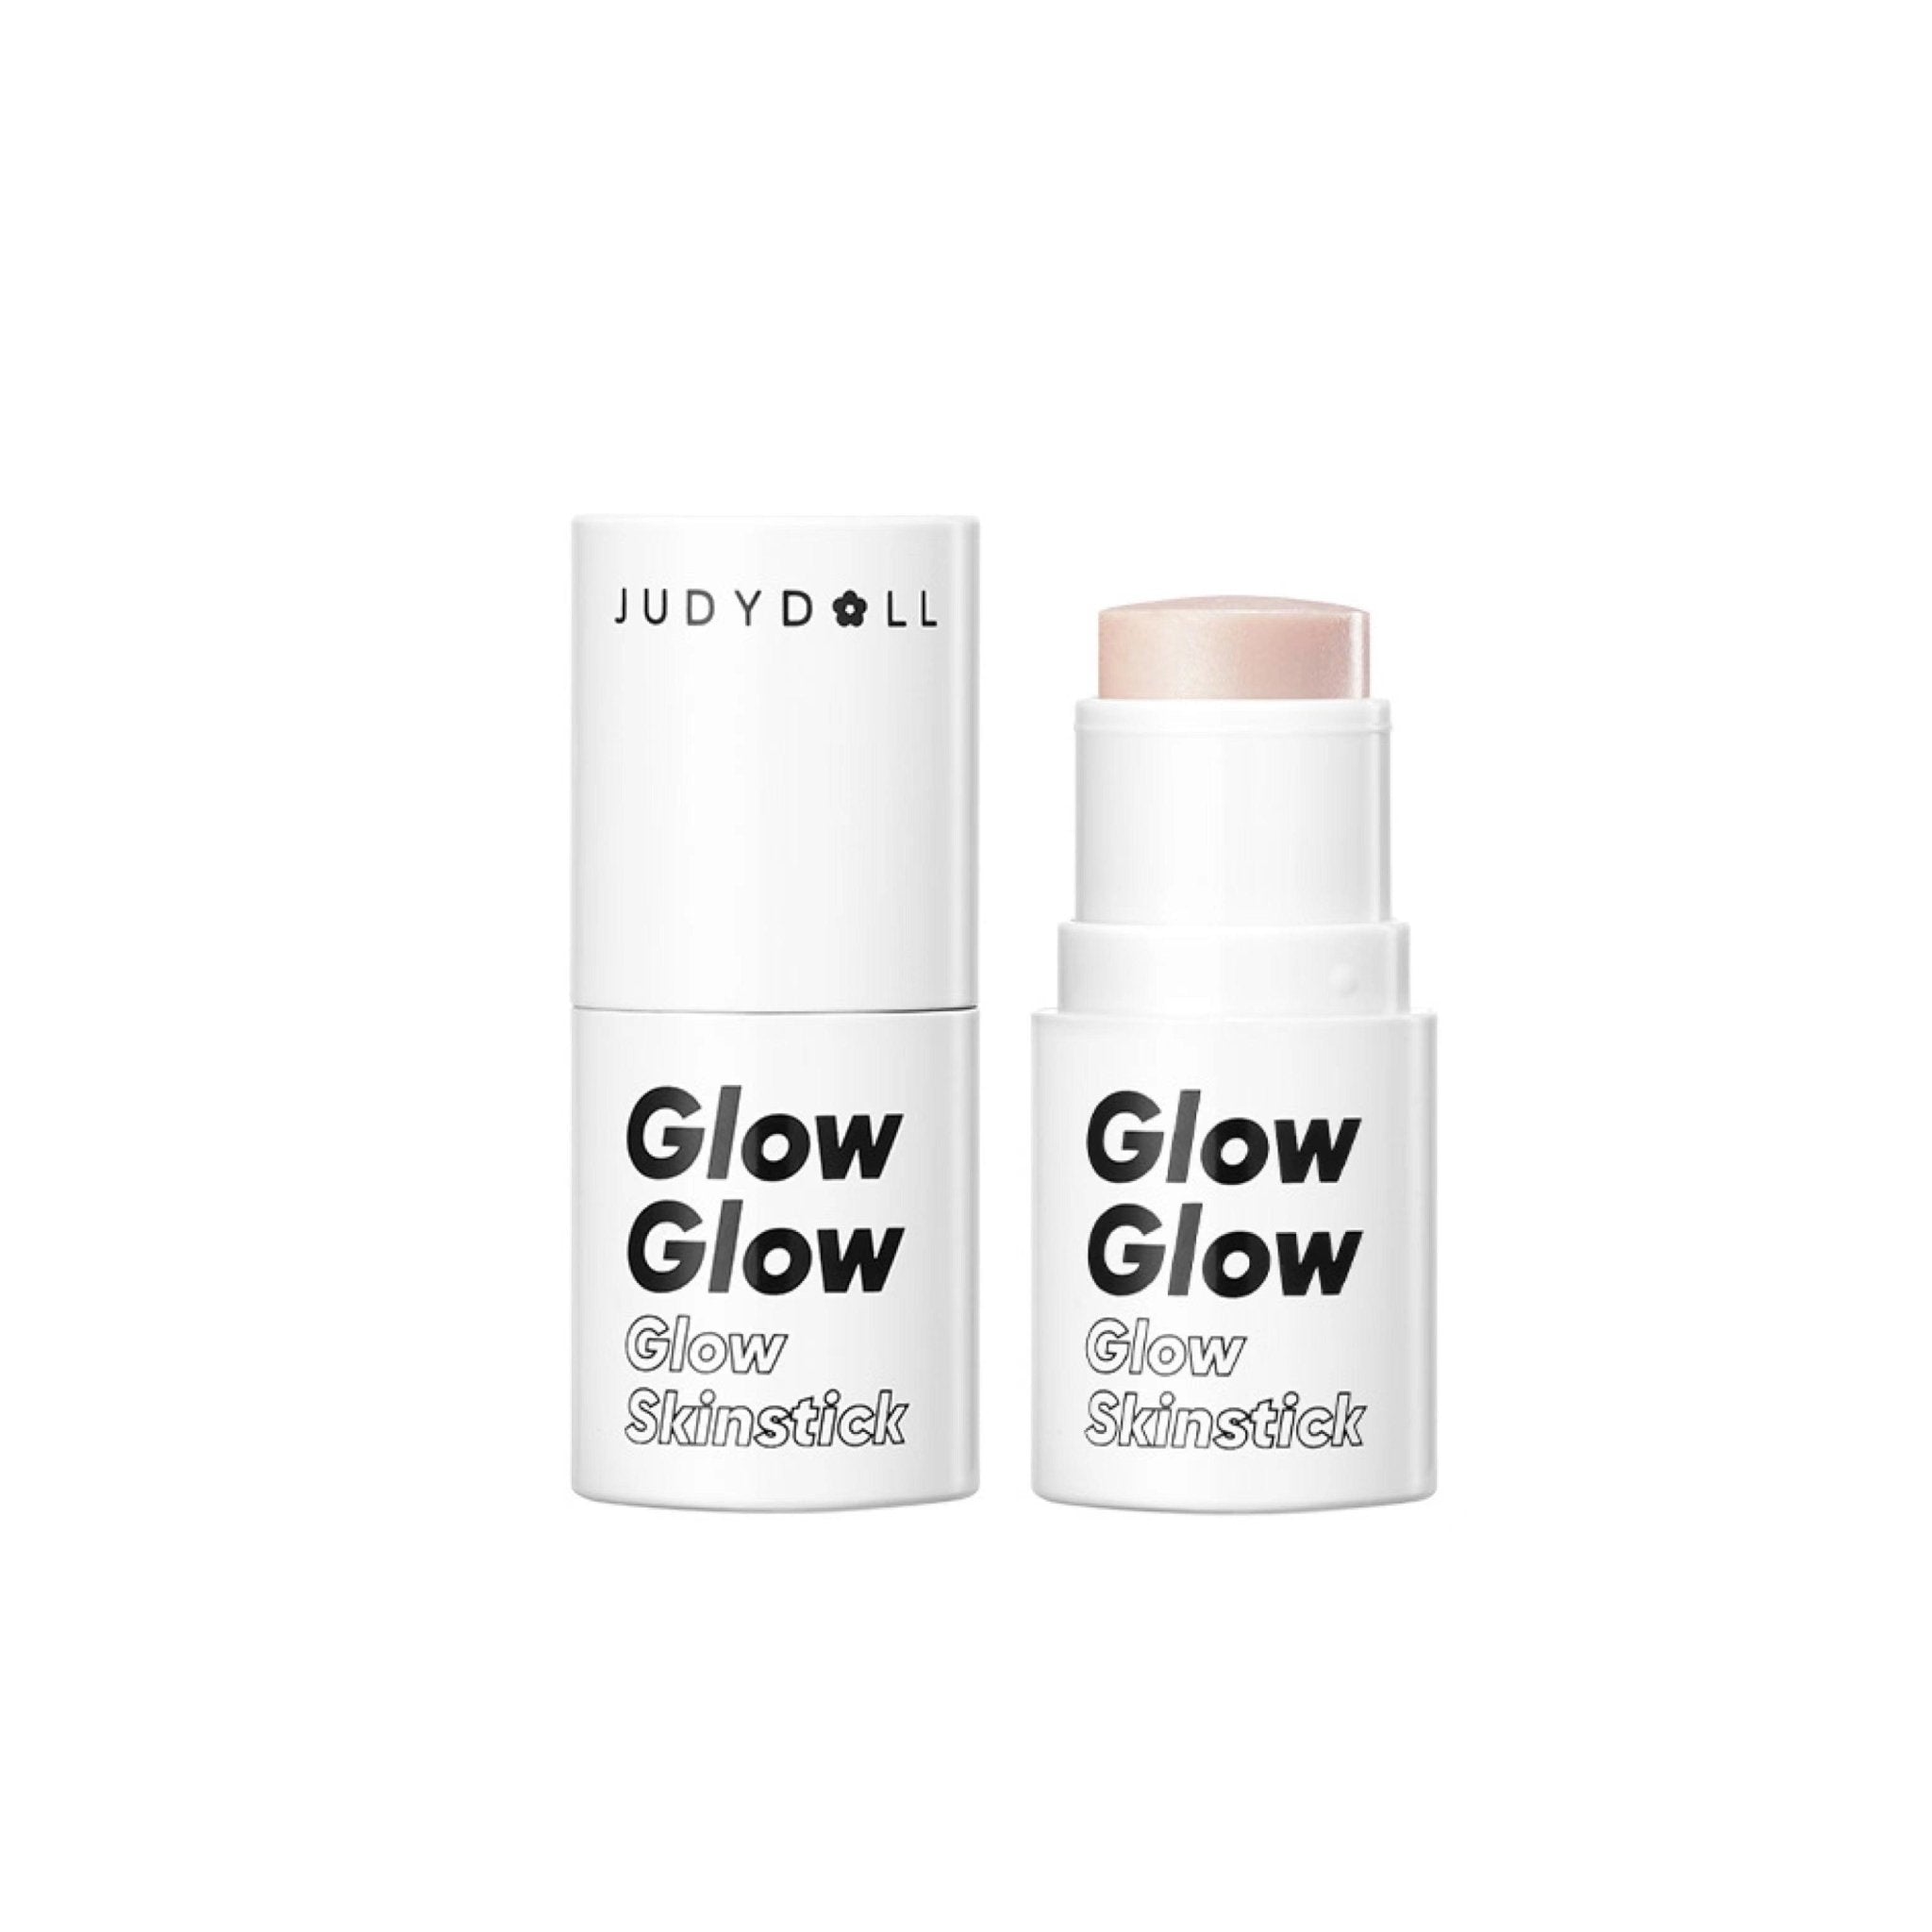 Judydoll Glow Skinstick JD109 - Chic Decent